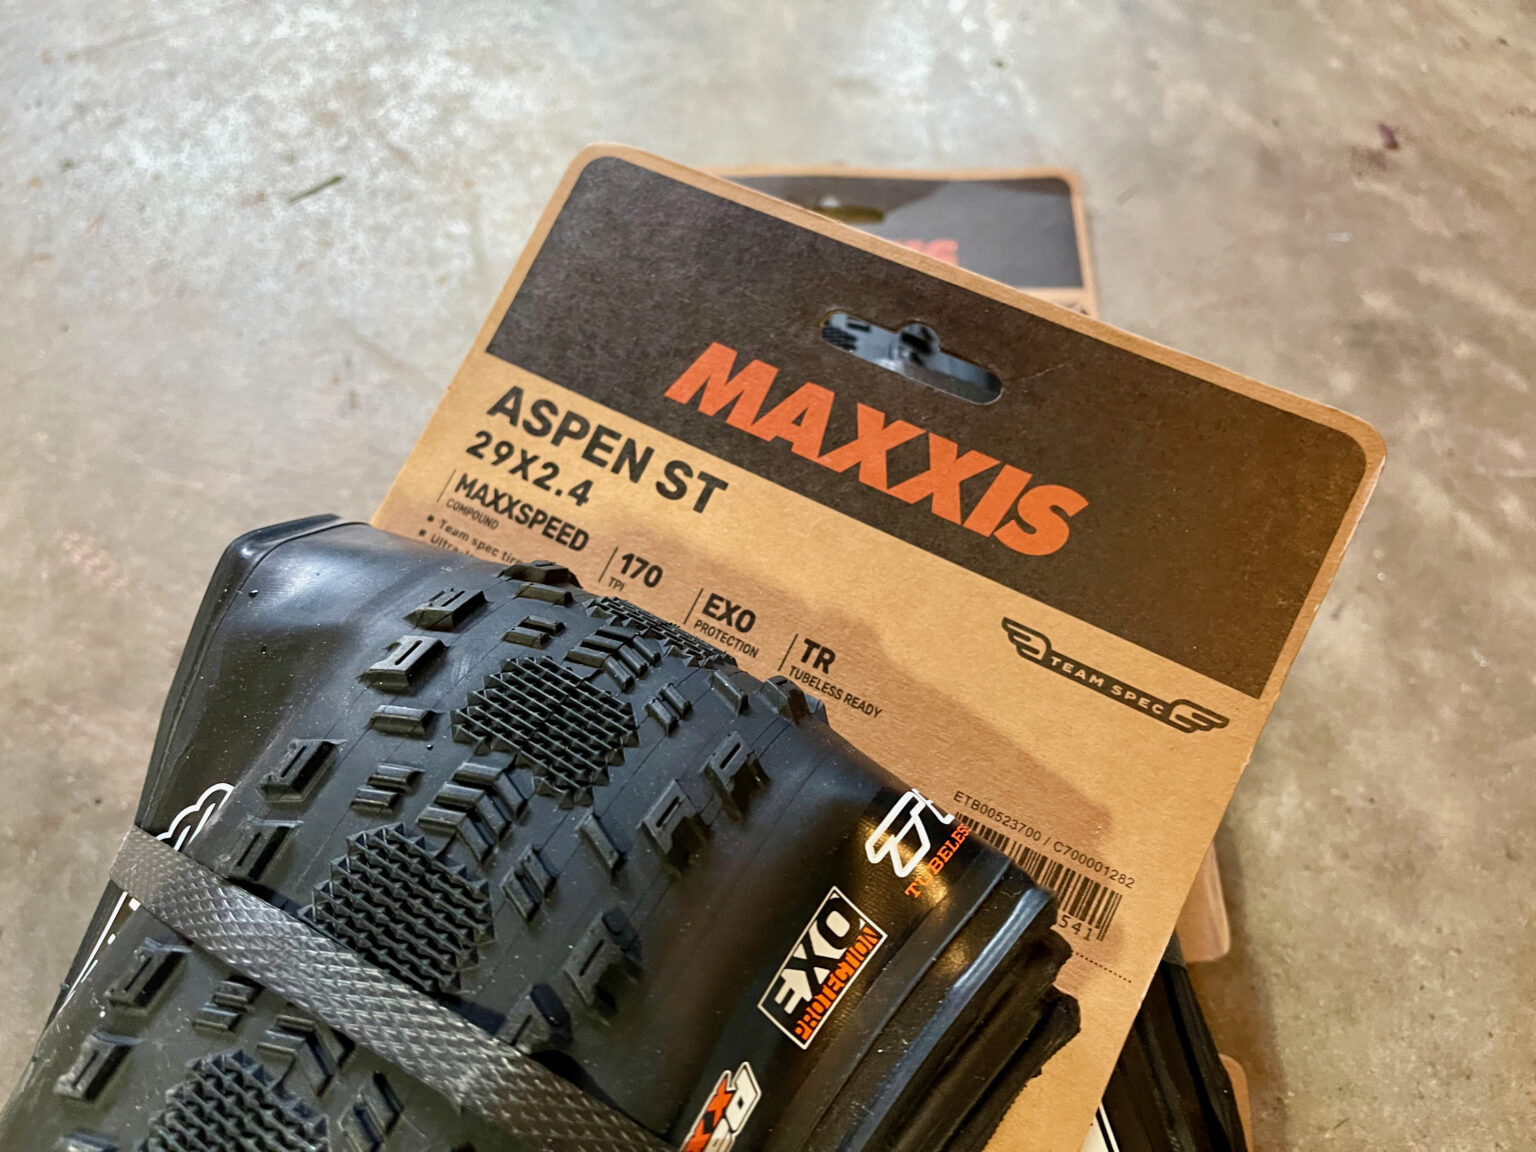 Maxxis Aspen ST packaging TS